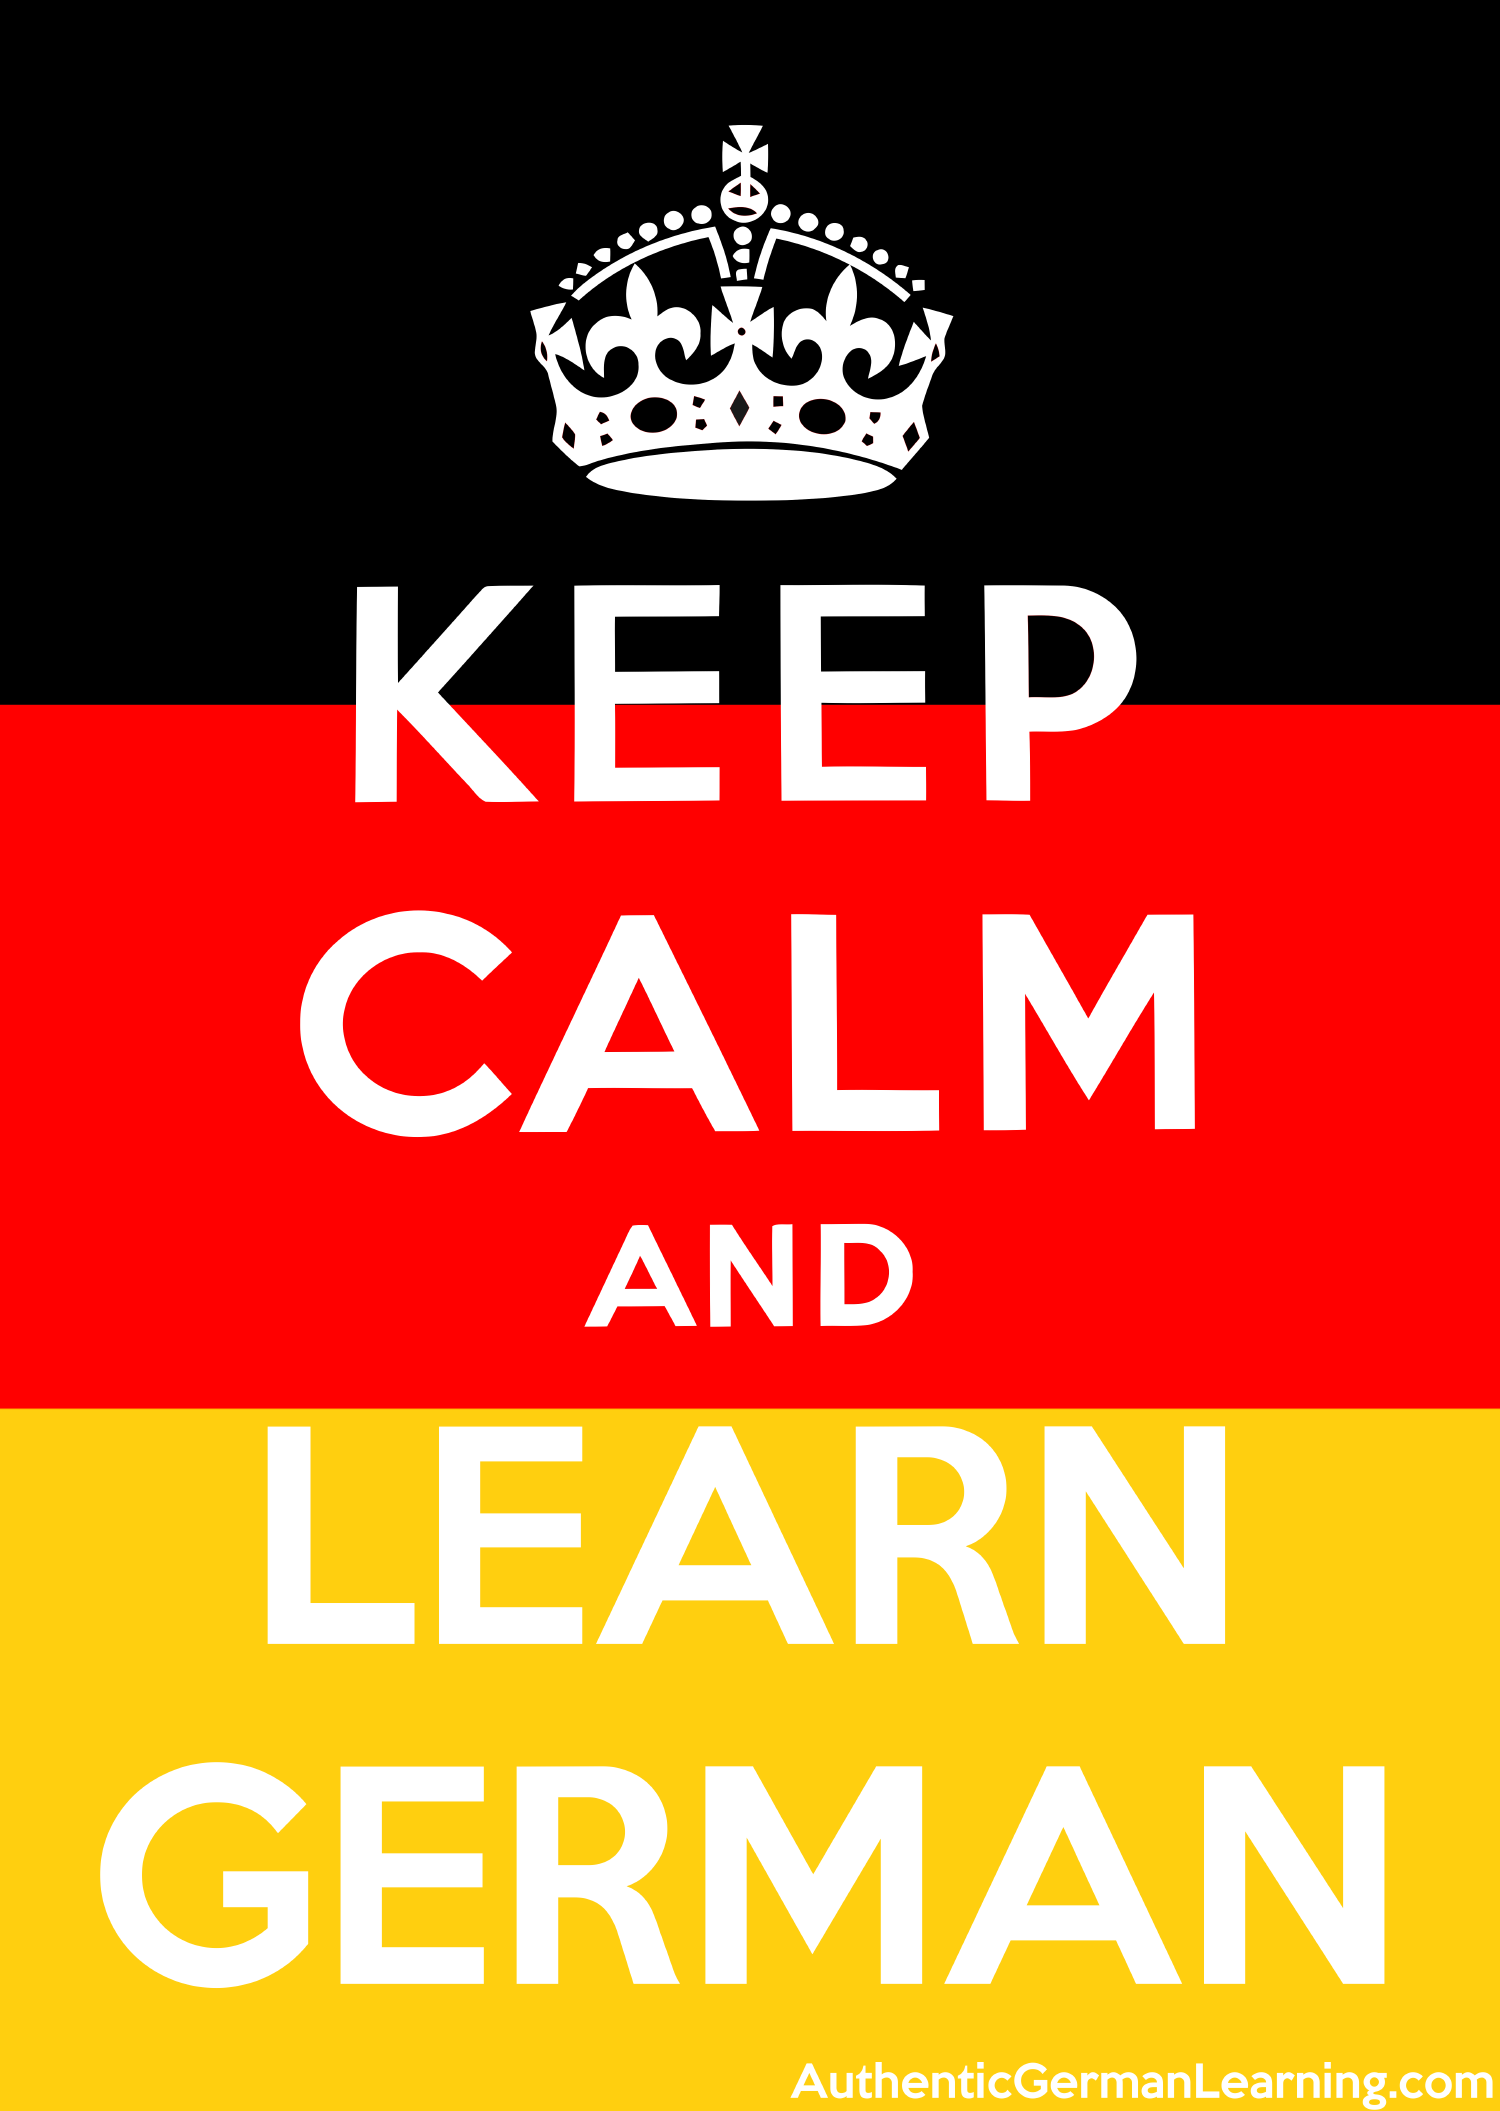 Keep calm and learn german